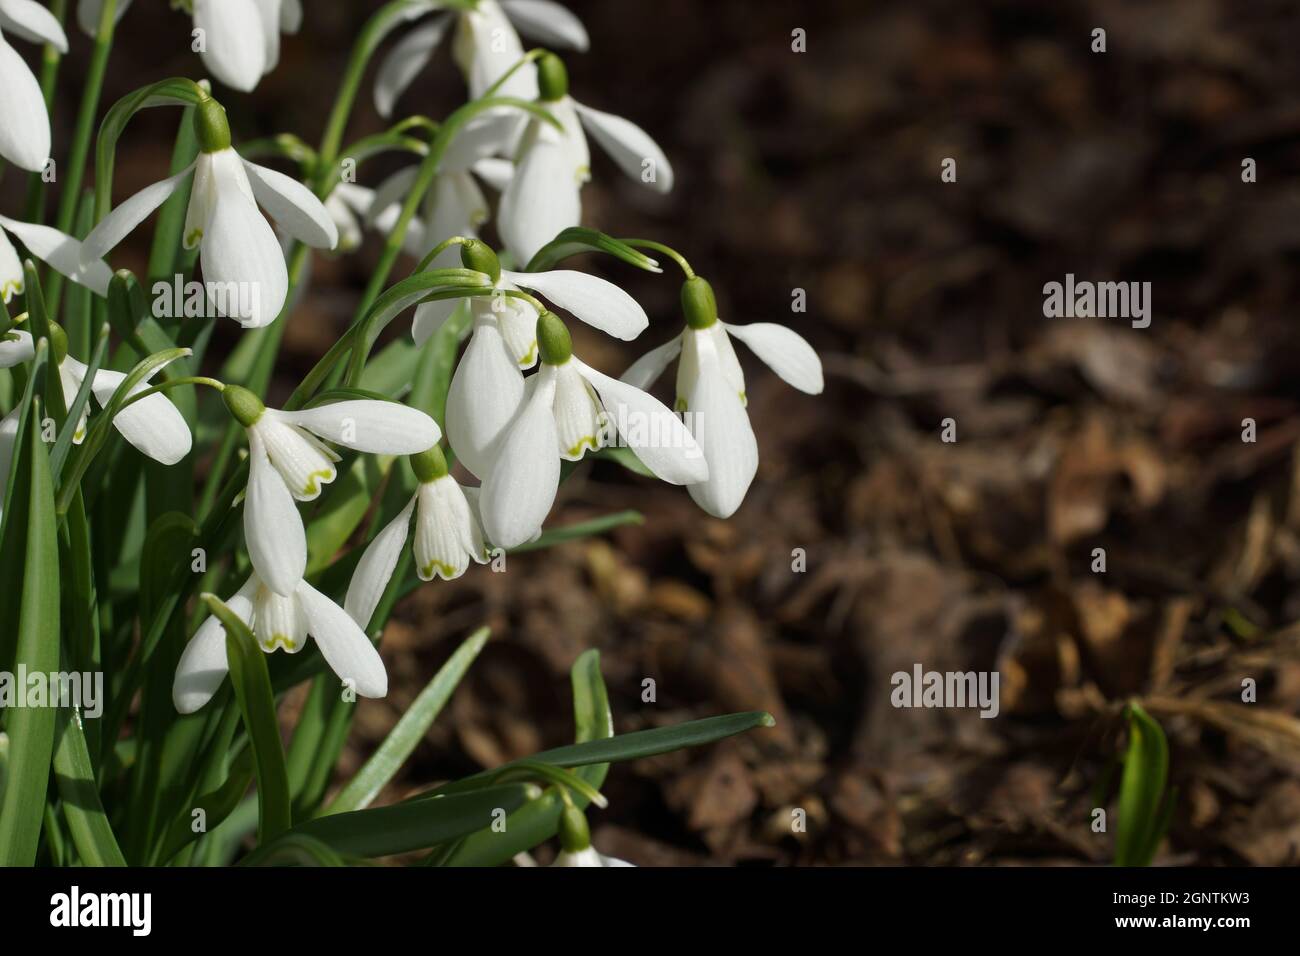 Galanthus nivalis, snowdrop, common snowdrop. White flowers close up. Horizontal photo. Stock Photo